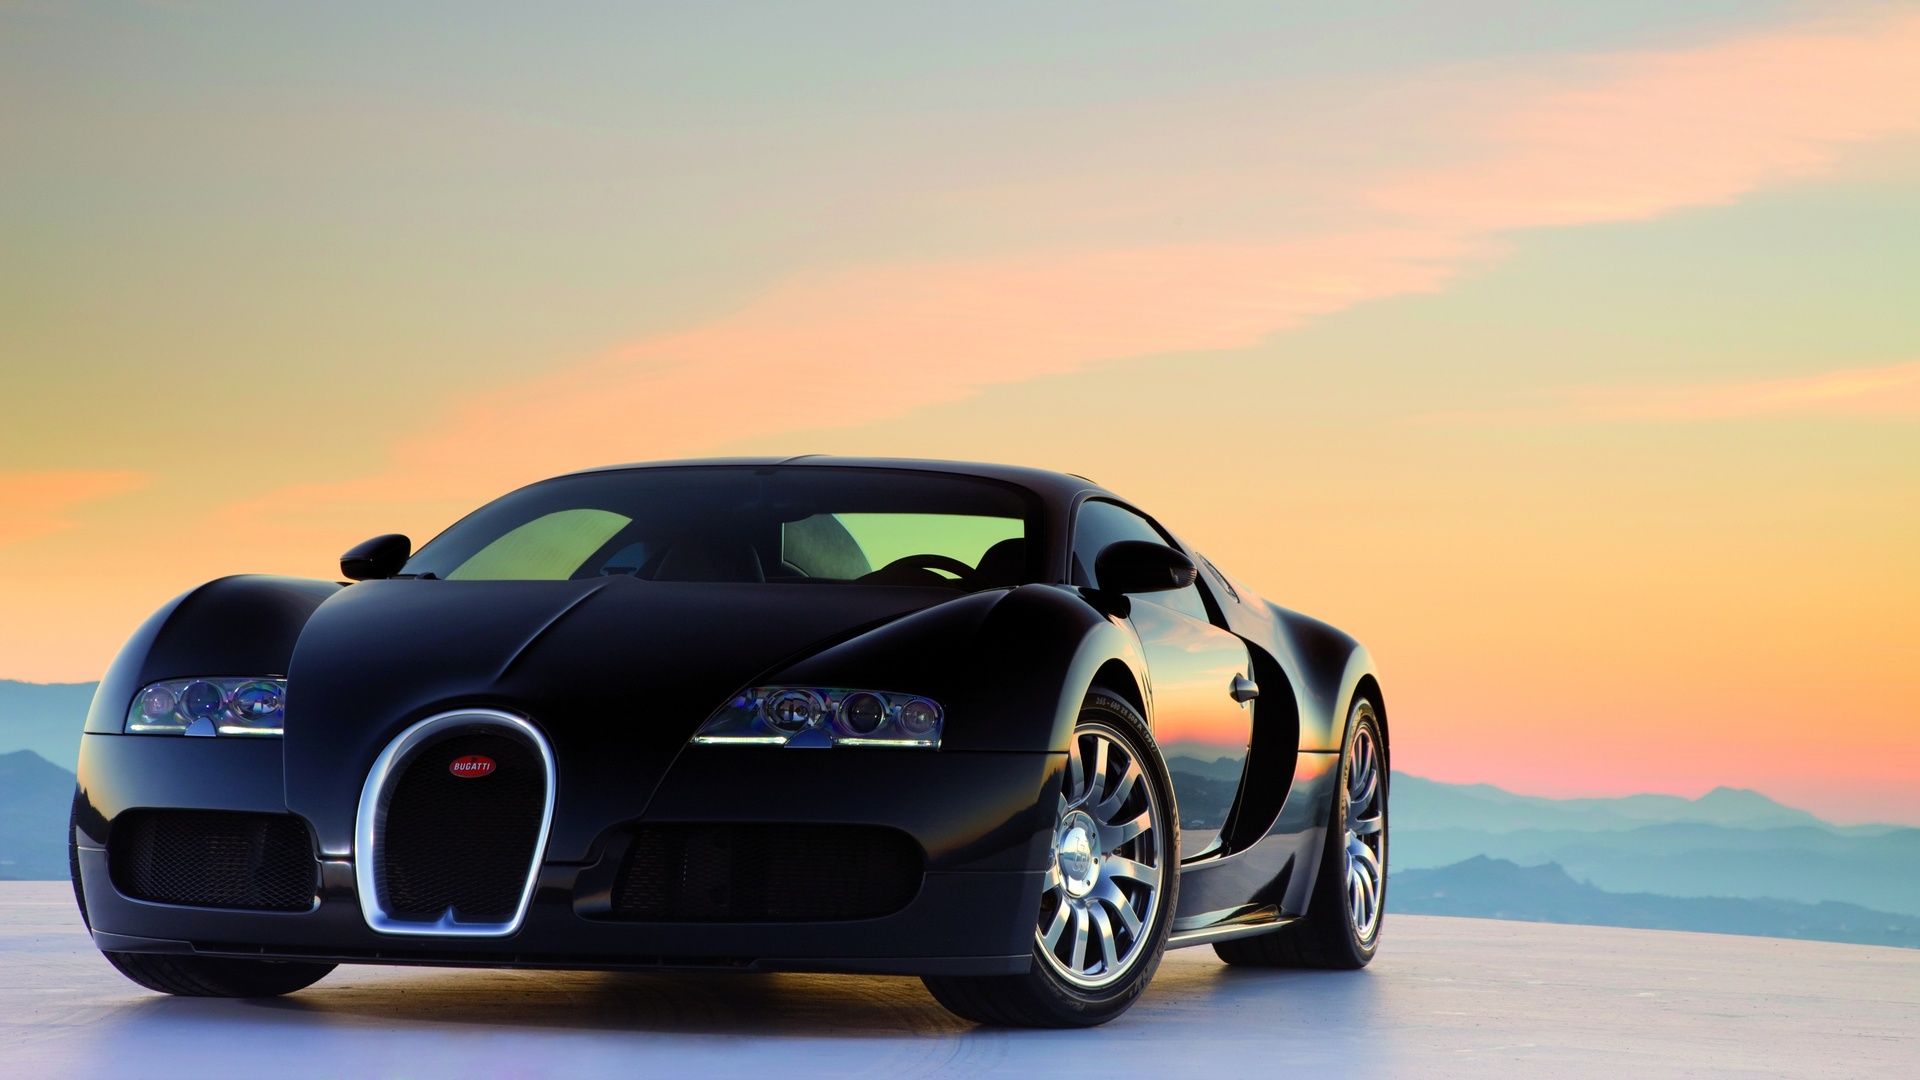 Bugatti Cars Hd Wallpapers Download Haumesalzpo